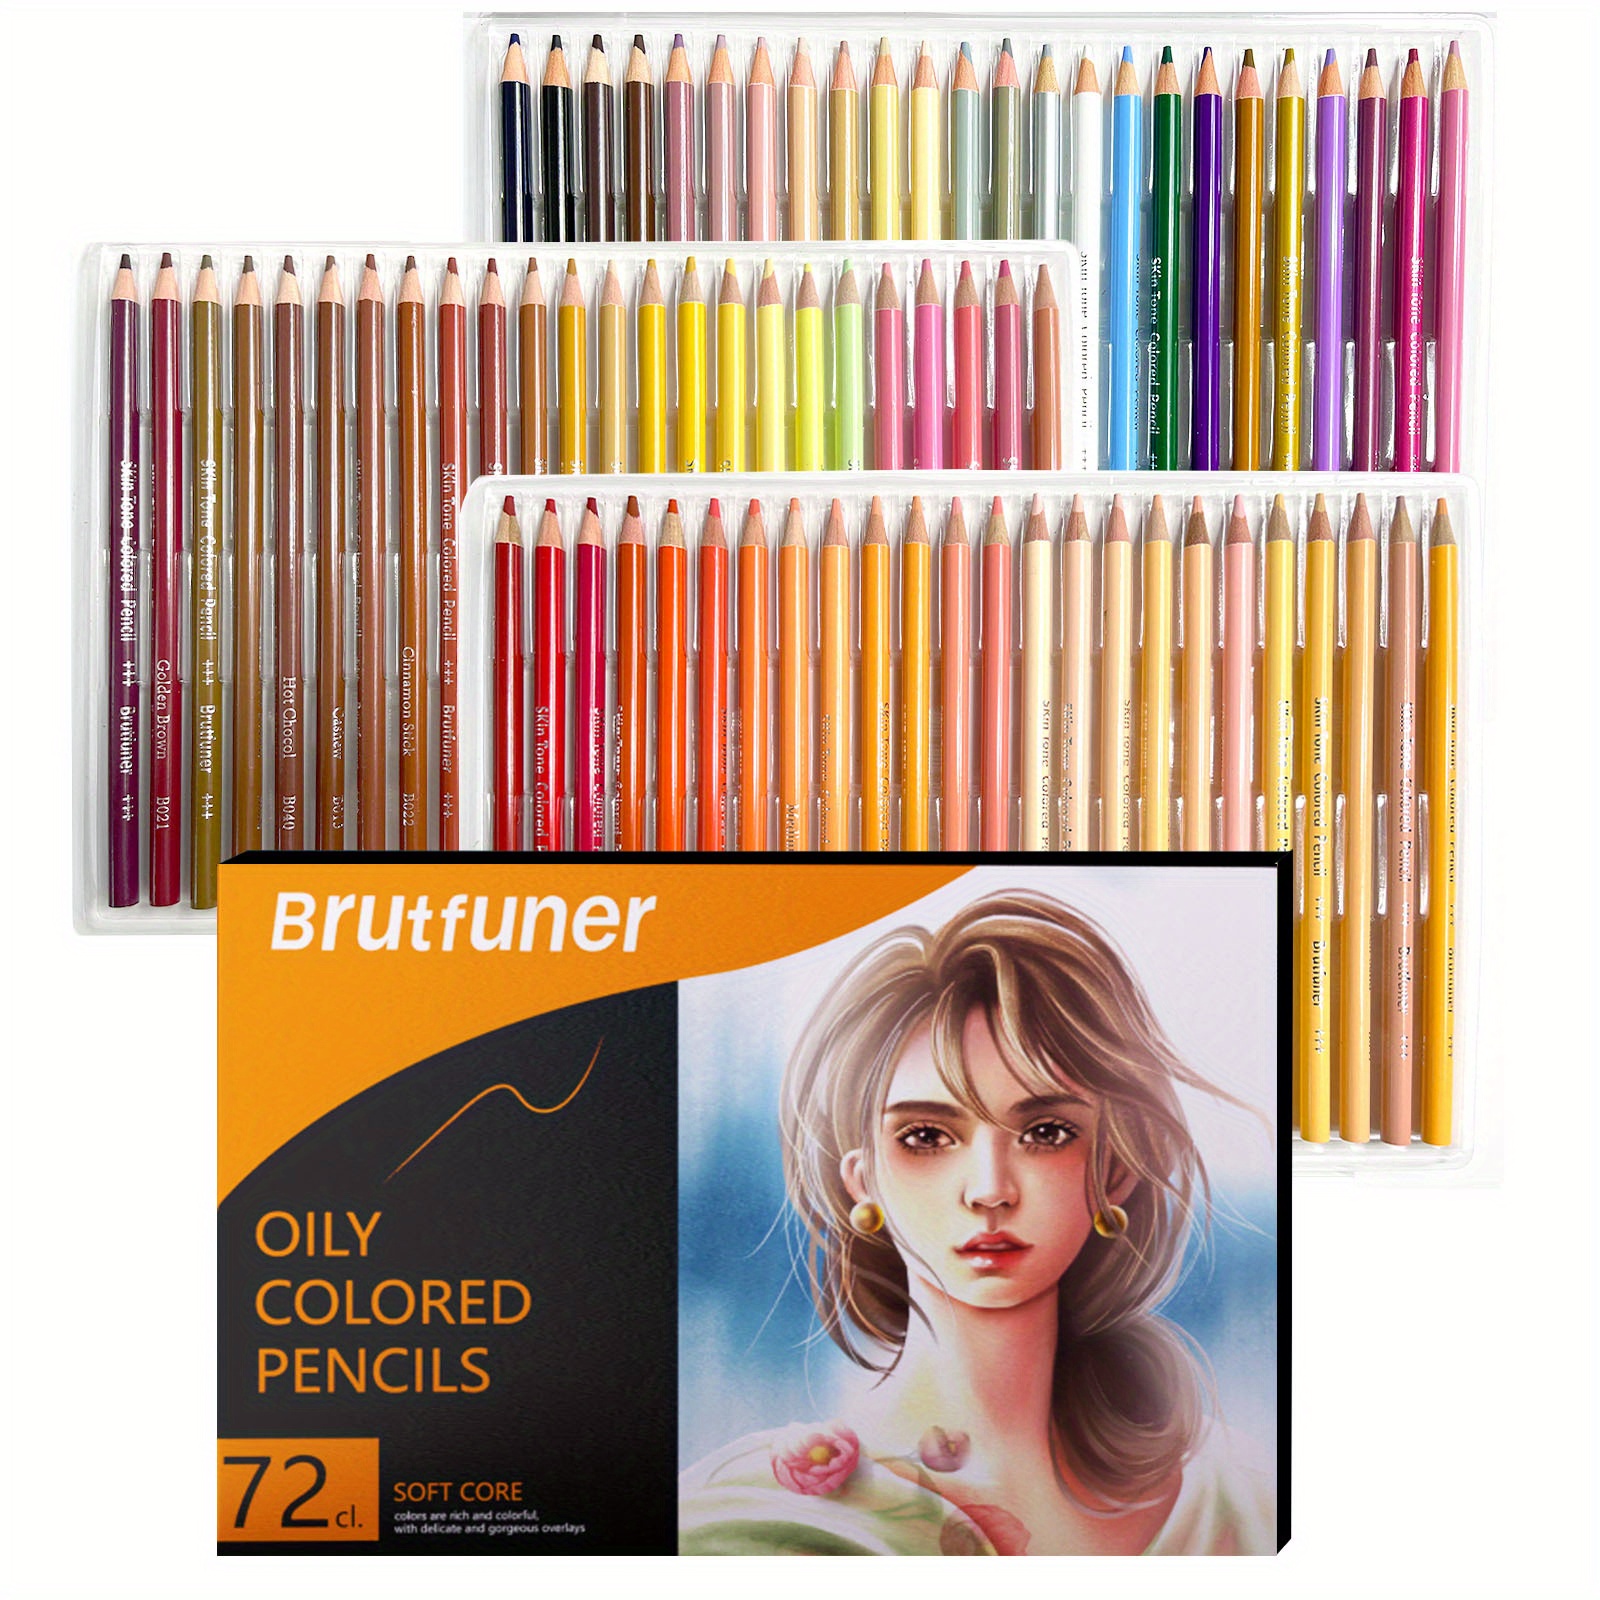 New Professional Charcoal Pencils Drawing Set, Skin Tone Colored Pencils